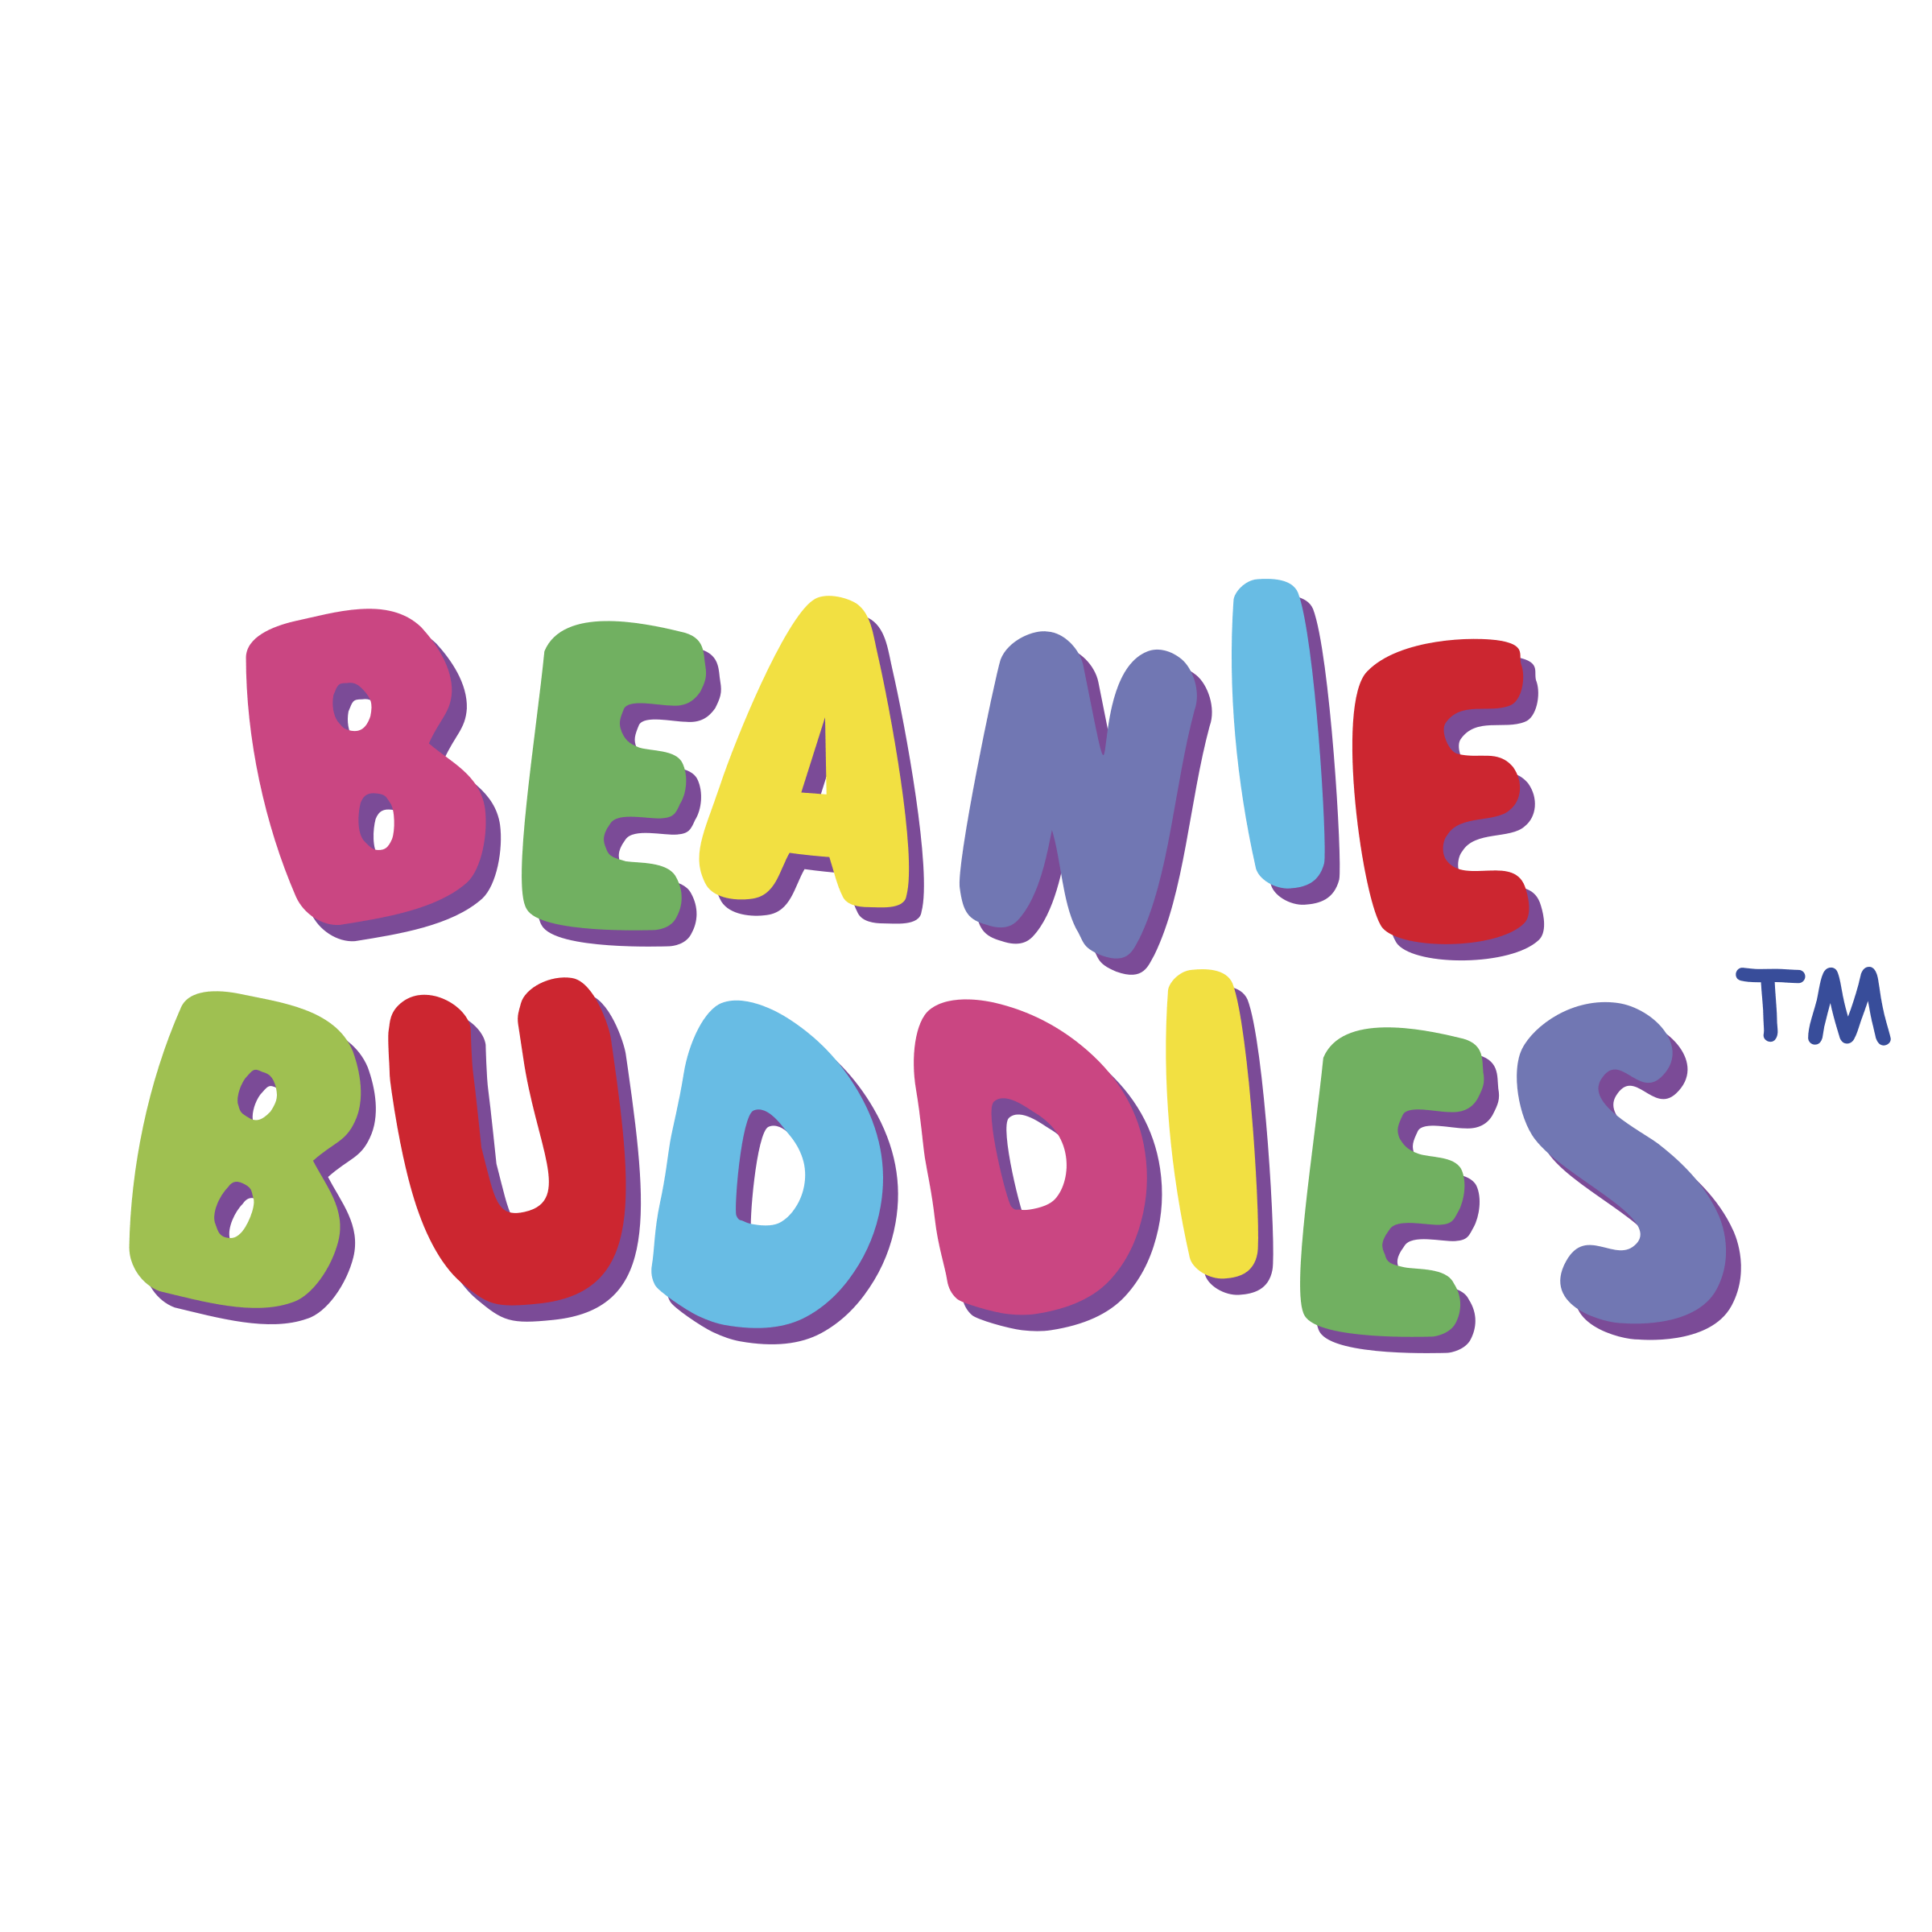 Buddies Logo - Beanie Buddies Logo PNG Transparent & SVG Vector - Freebie Supply